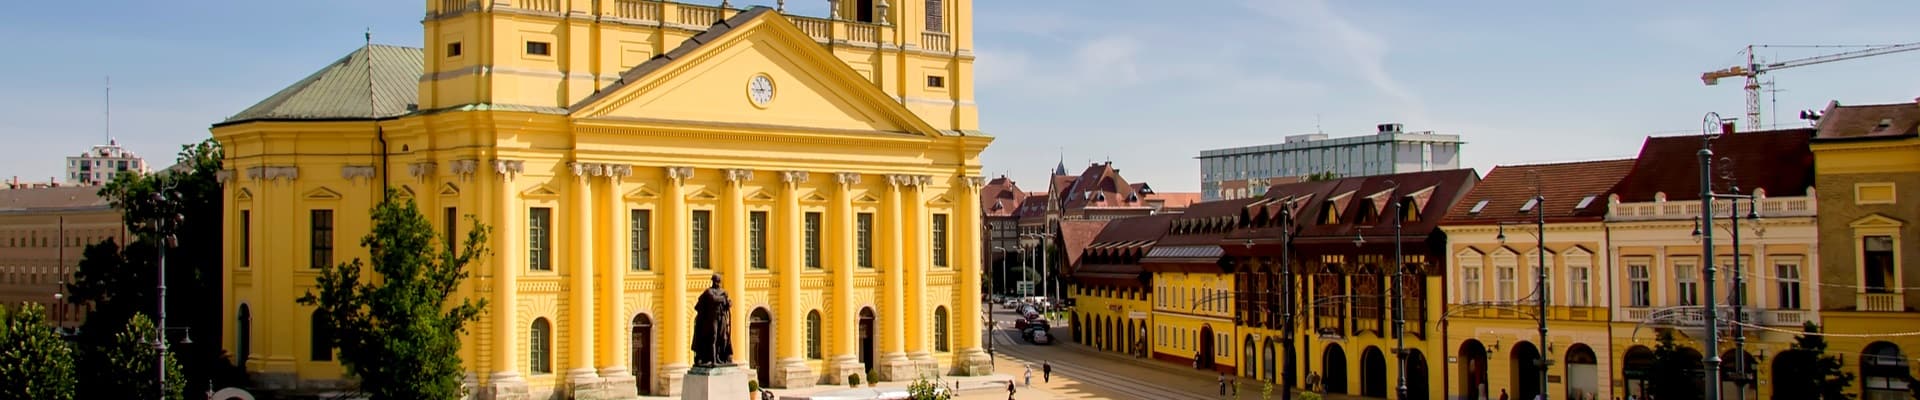 Debrecen főtér Református nagytemplom